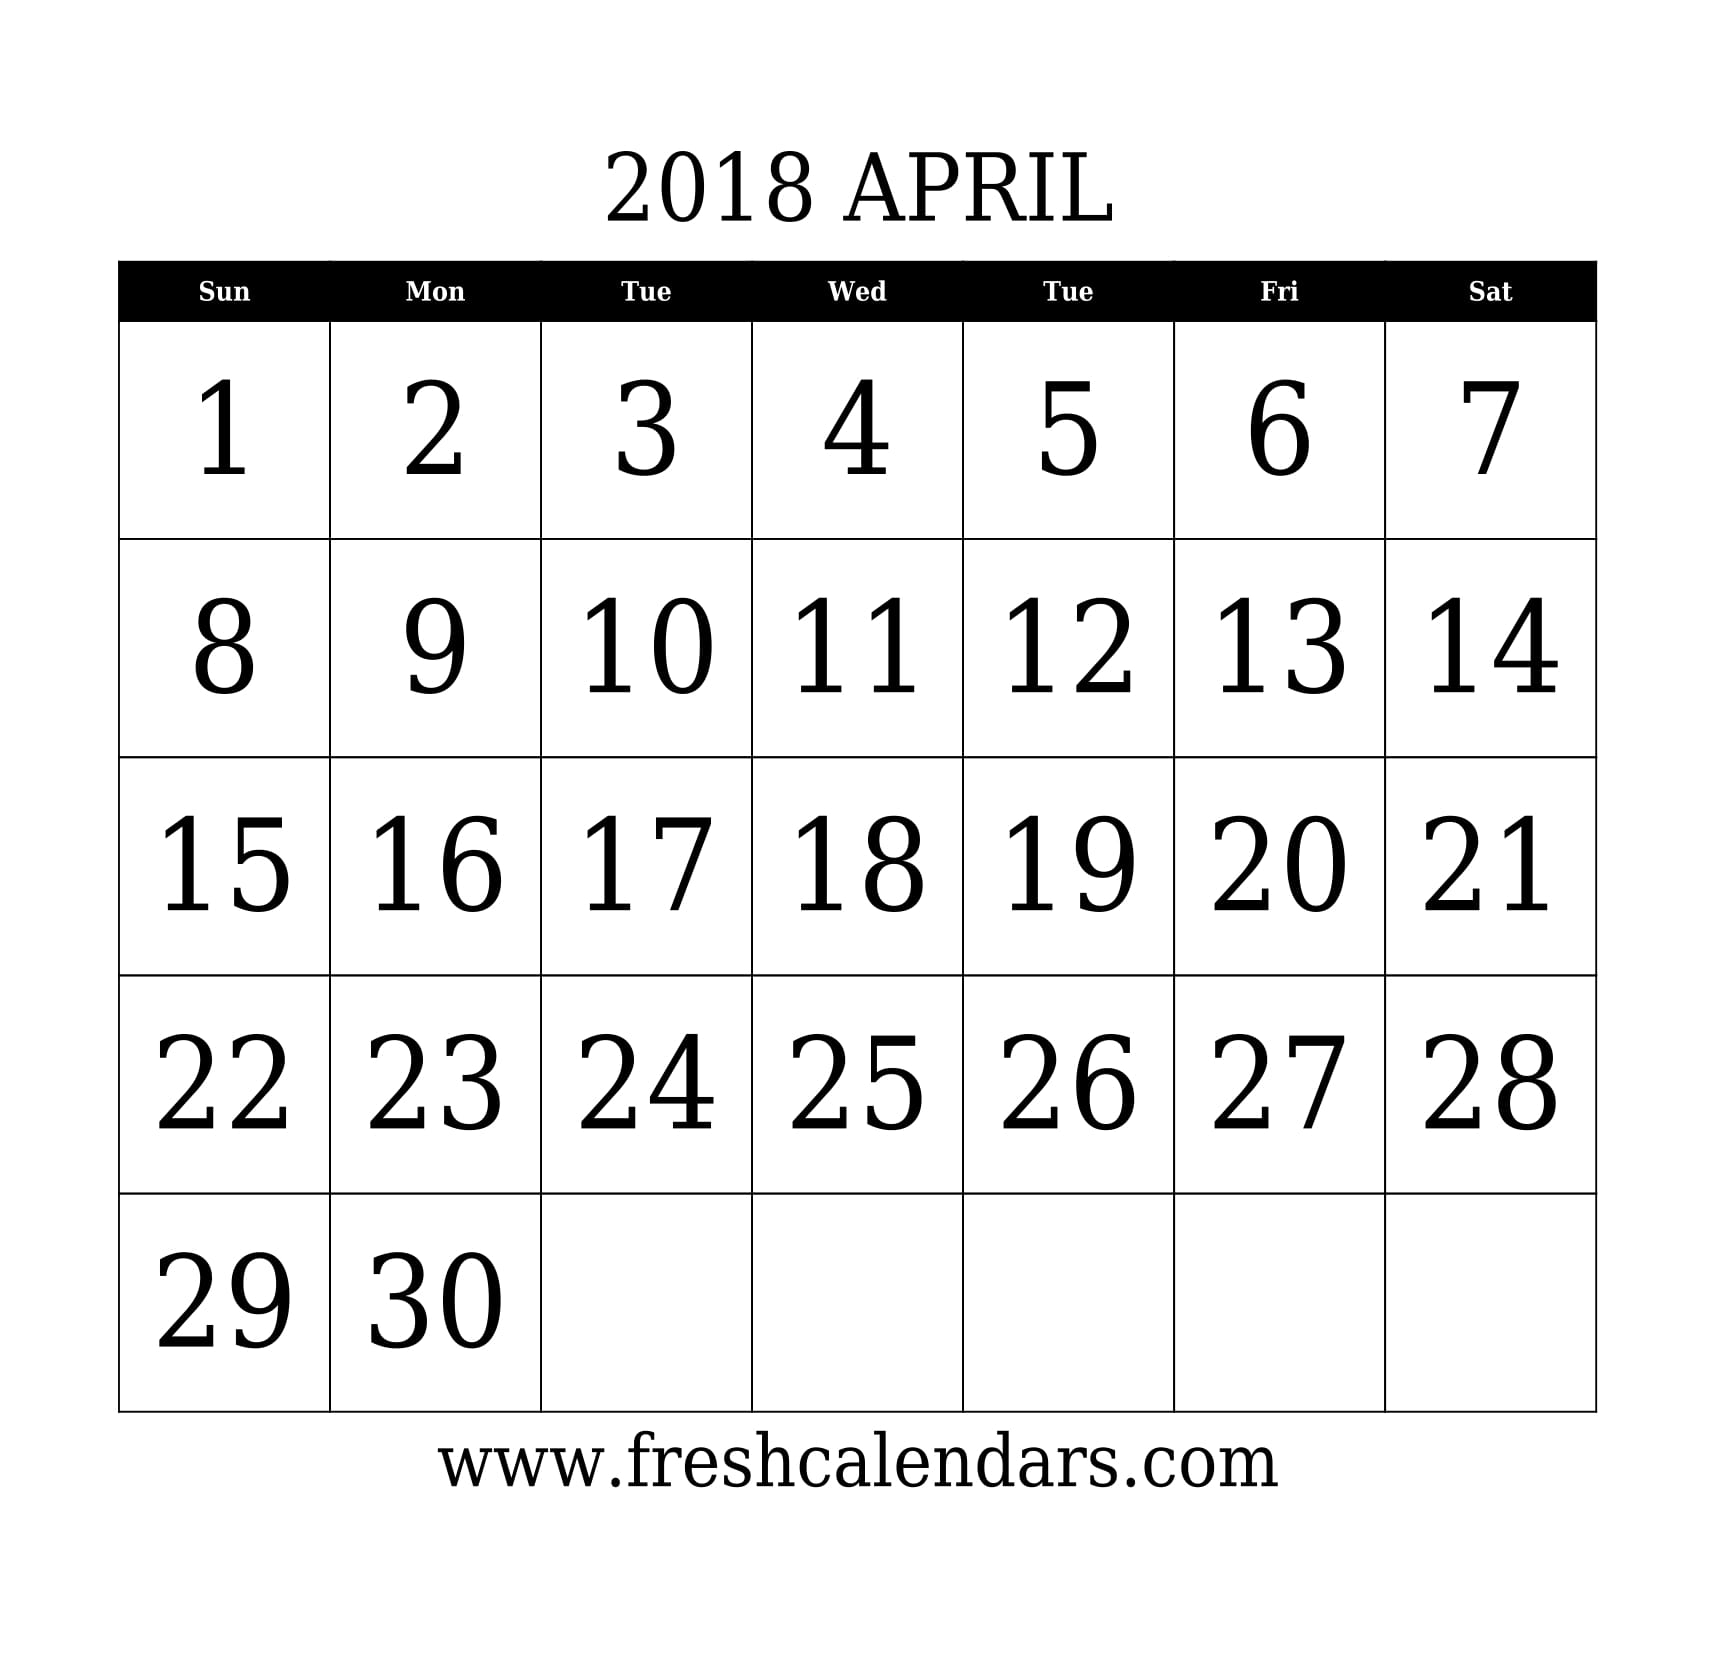 April 2018 Calendar With Large Dates